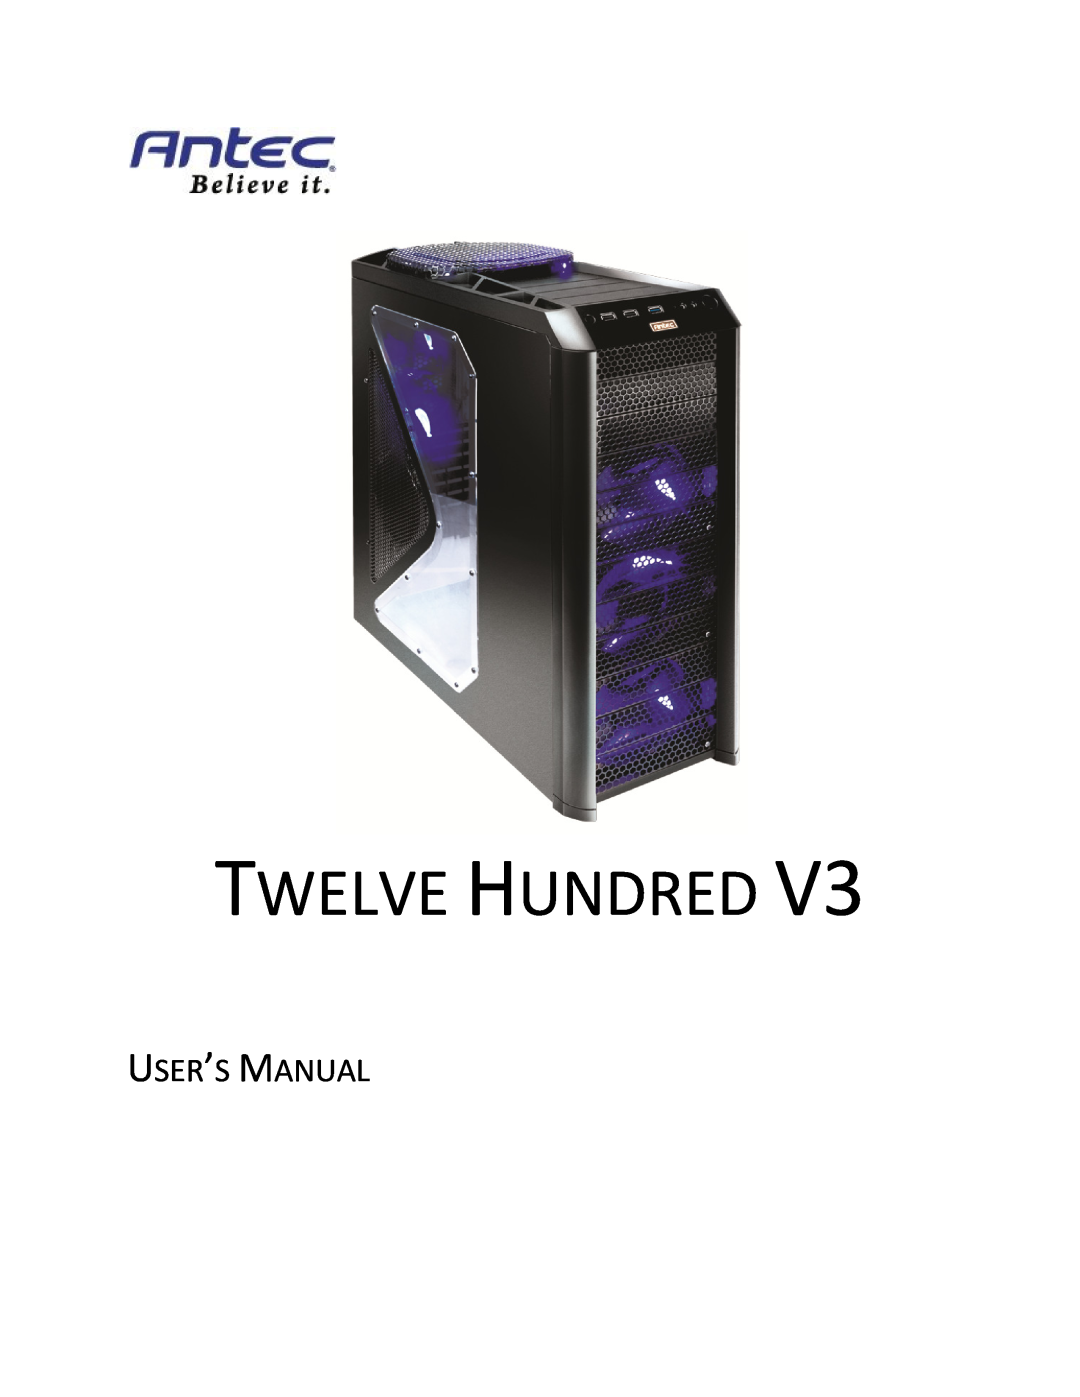 Antec V3 user manual Twelve Hundred, User’S Manual 